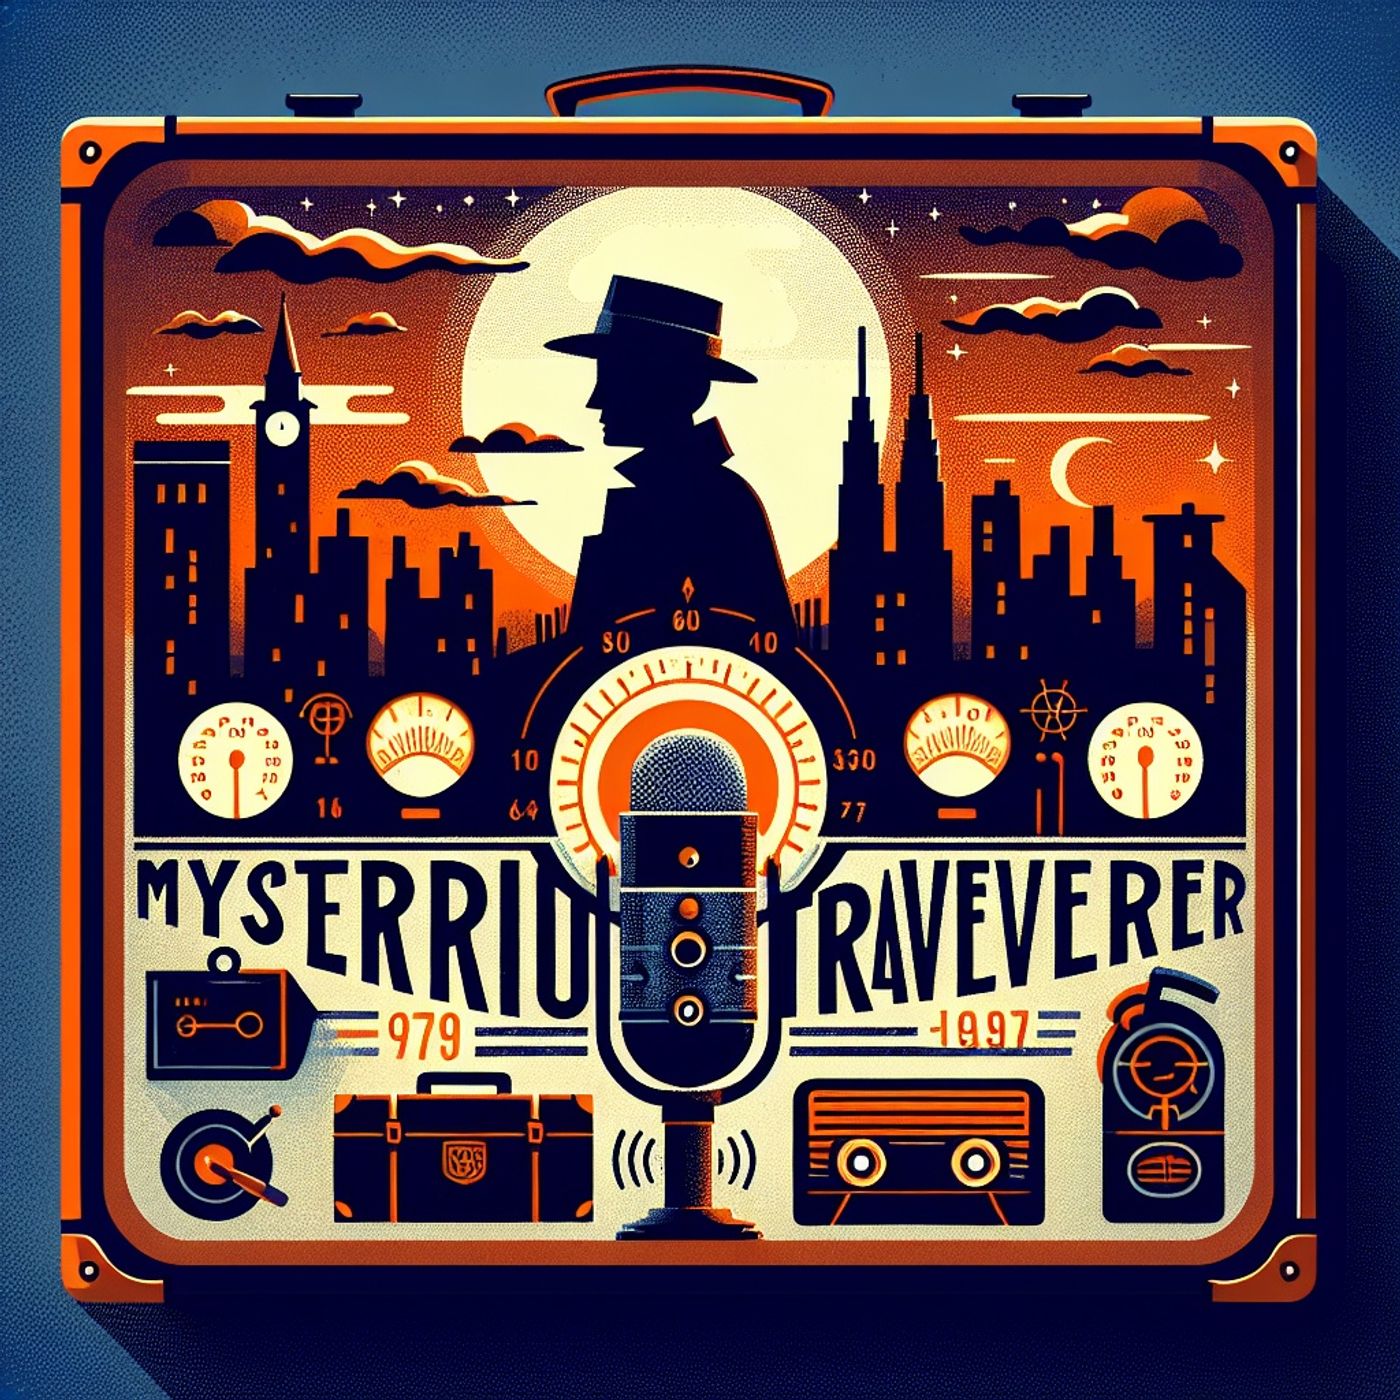 Mysterious Traveler - OTR Radio Show